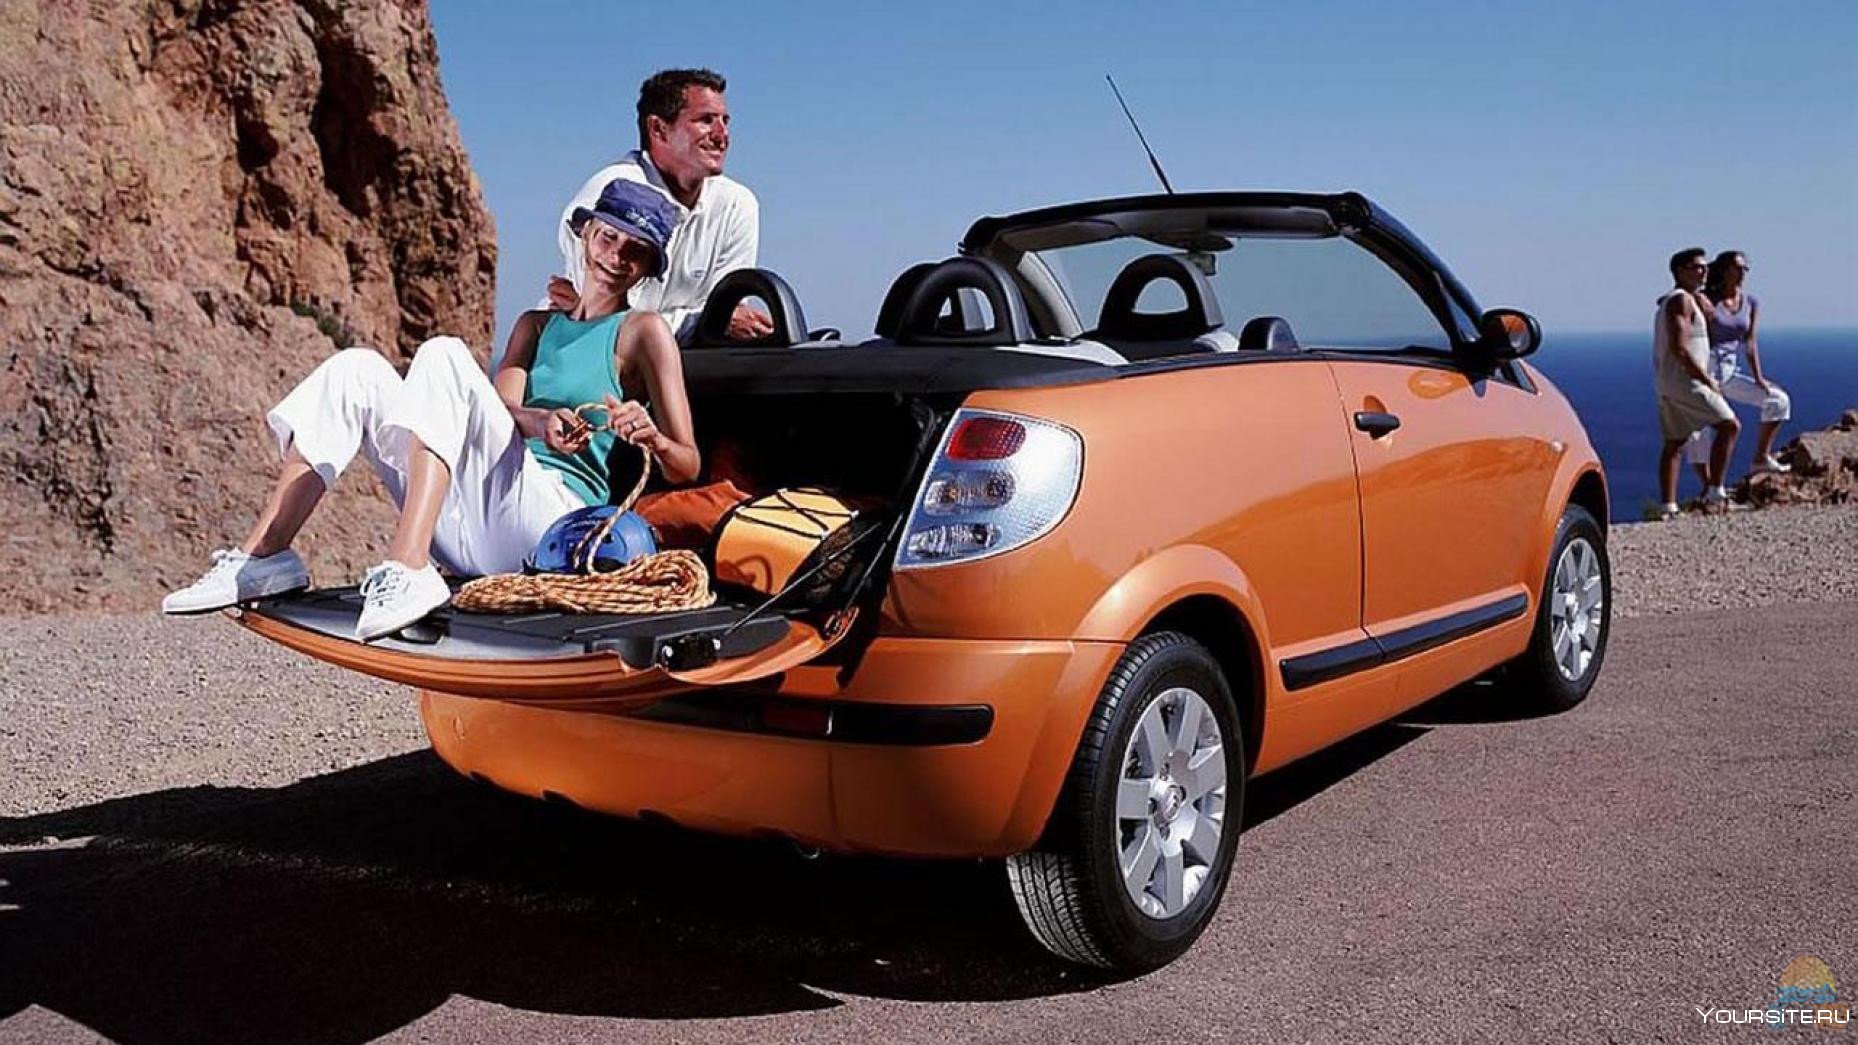 Travel my car. C3 Pluriel Mini Cooper. Путешествие на машине. Авто для путешествий. Автомобильный туризм.